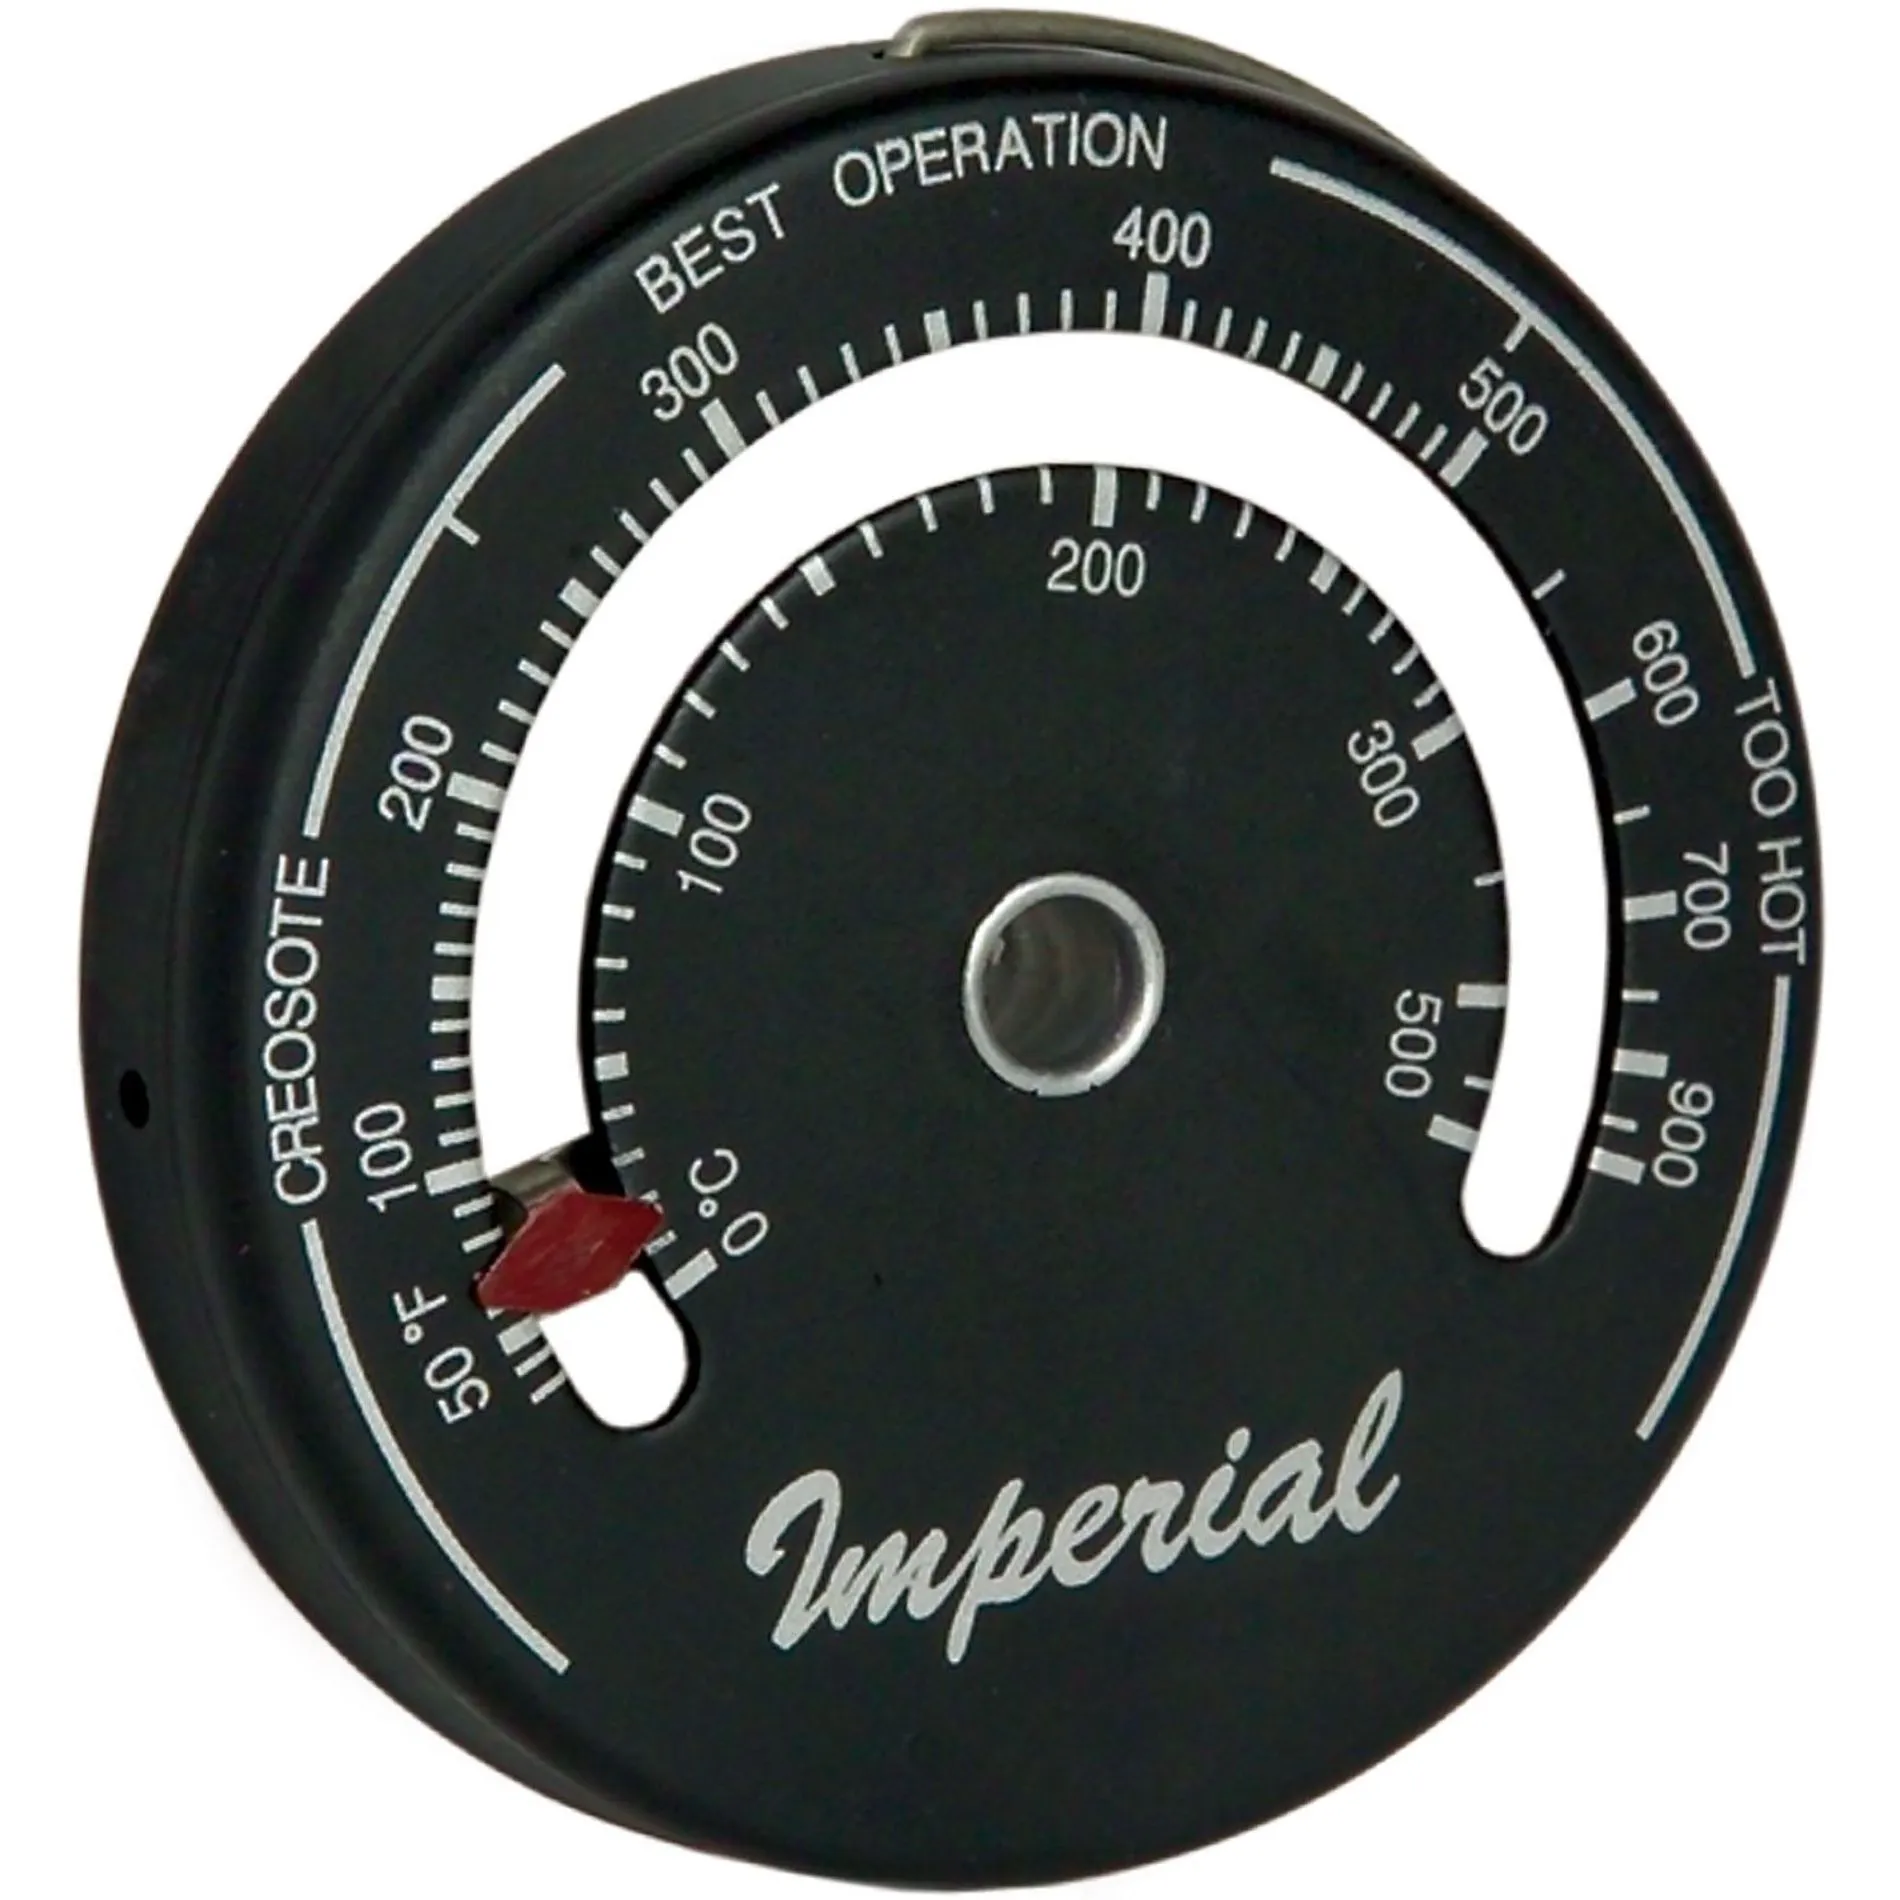 IMPERIAL 100 Fahrenheit to 850 Fahrenheit Magnetic Stove